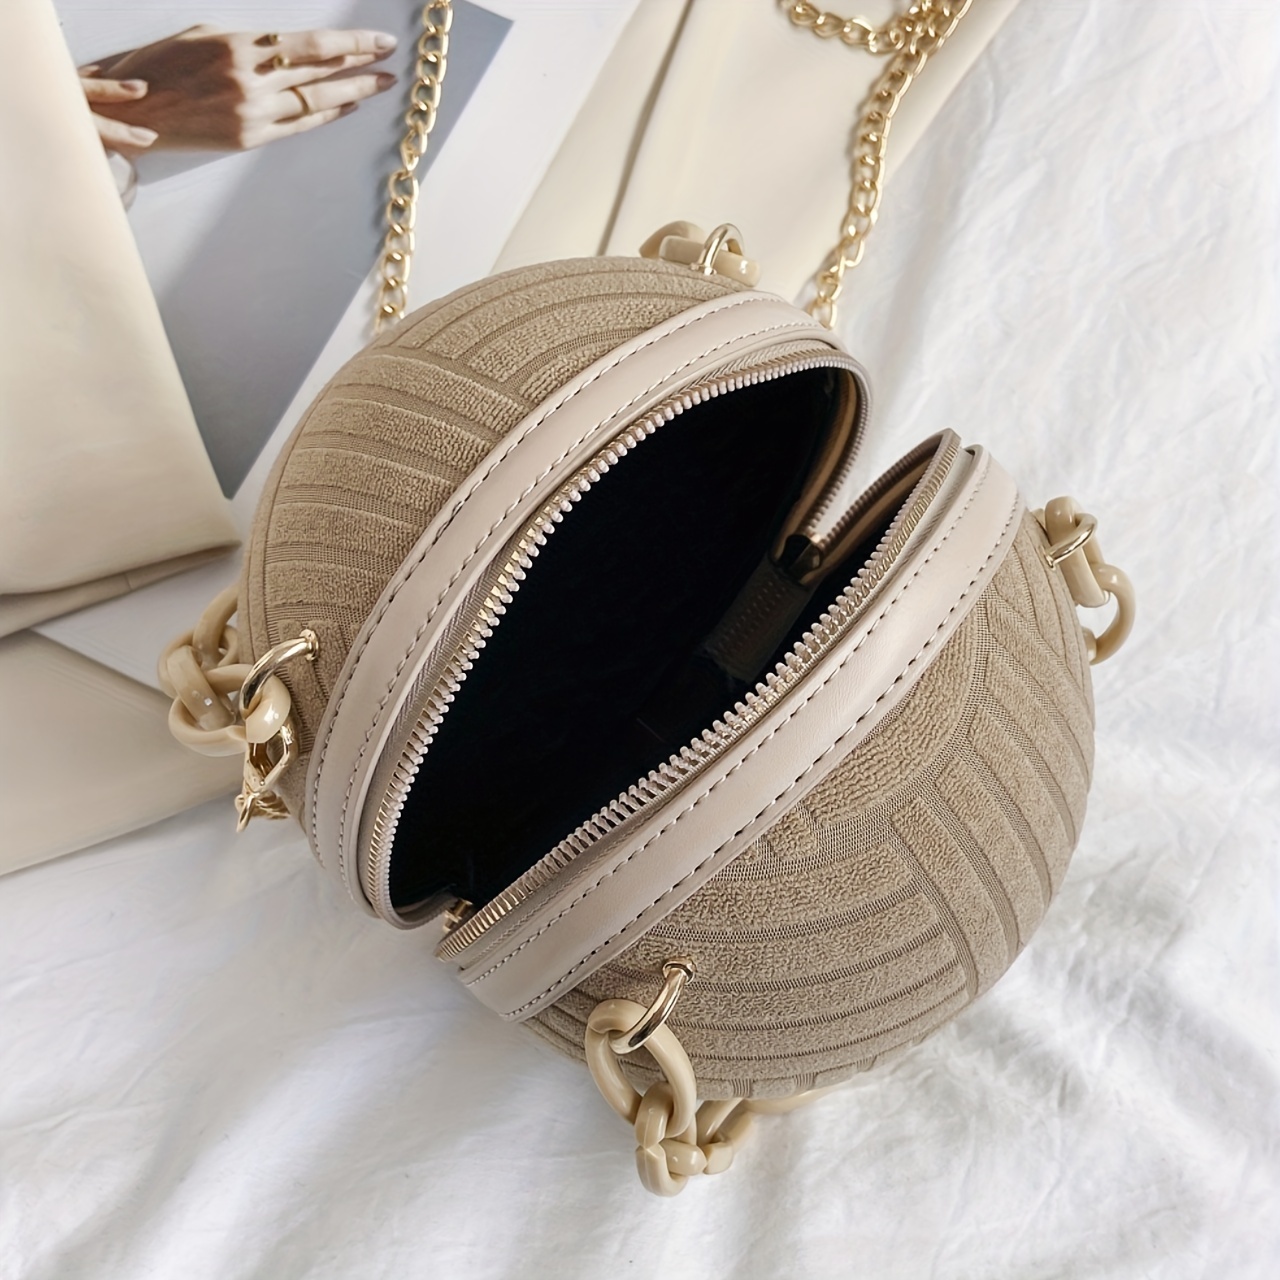 Unusual ball shaped purse  Unusual handbags, Bags, Purses and